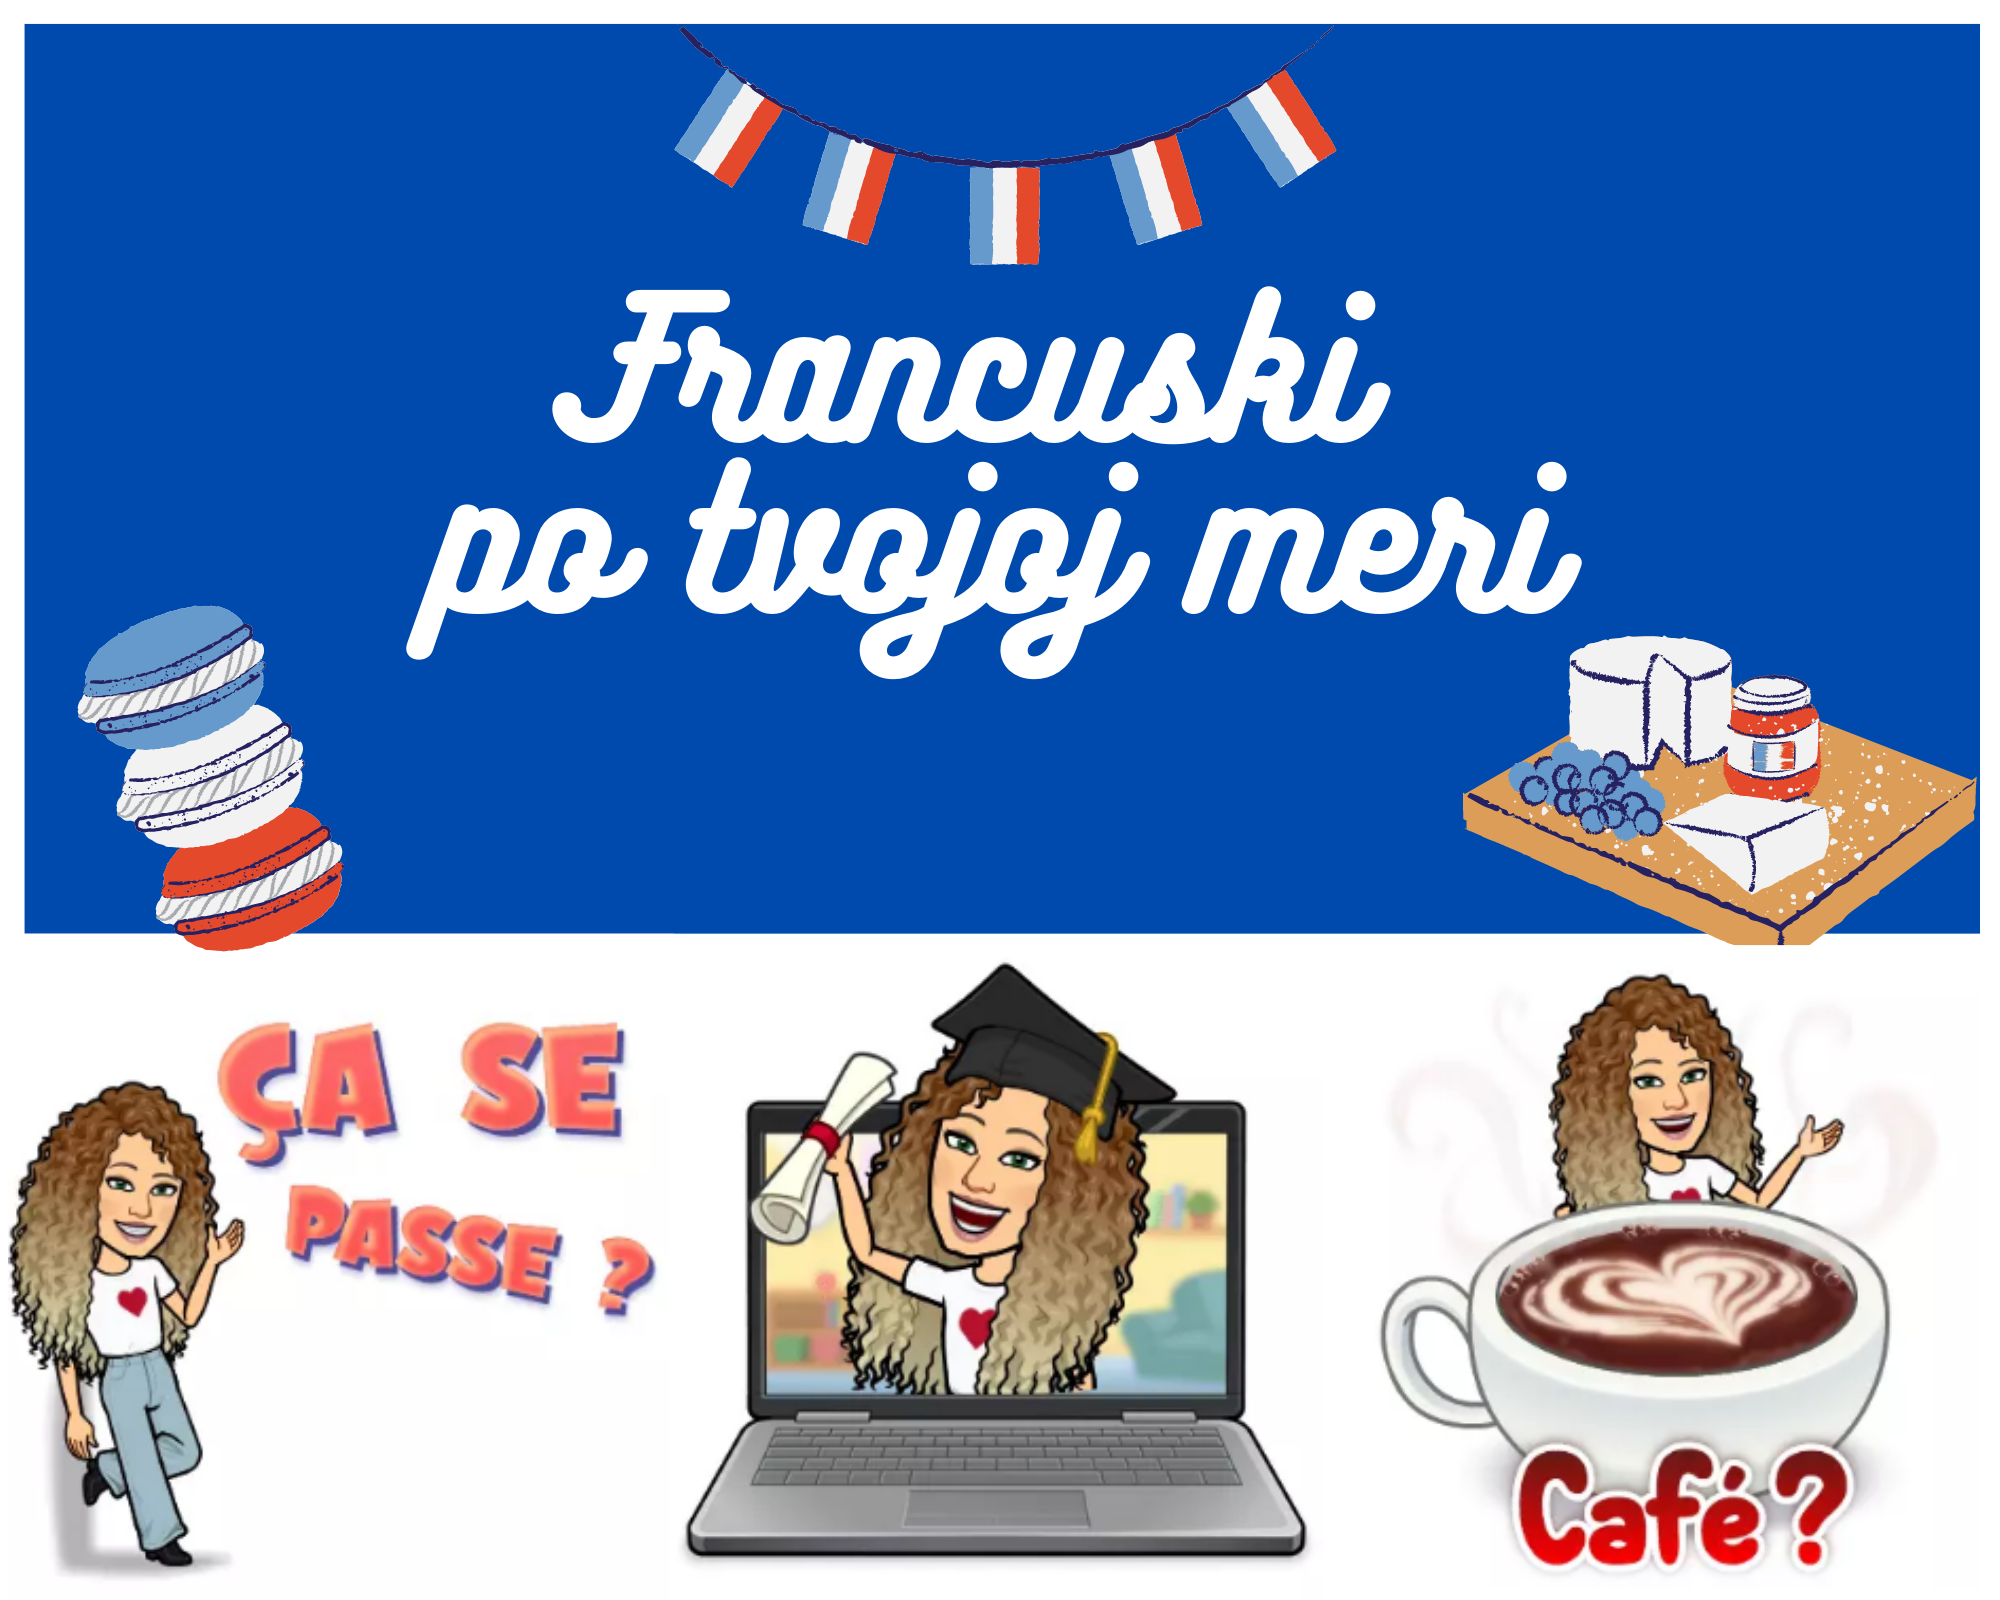 Časovi francuskog jezika po tvojoj meri